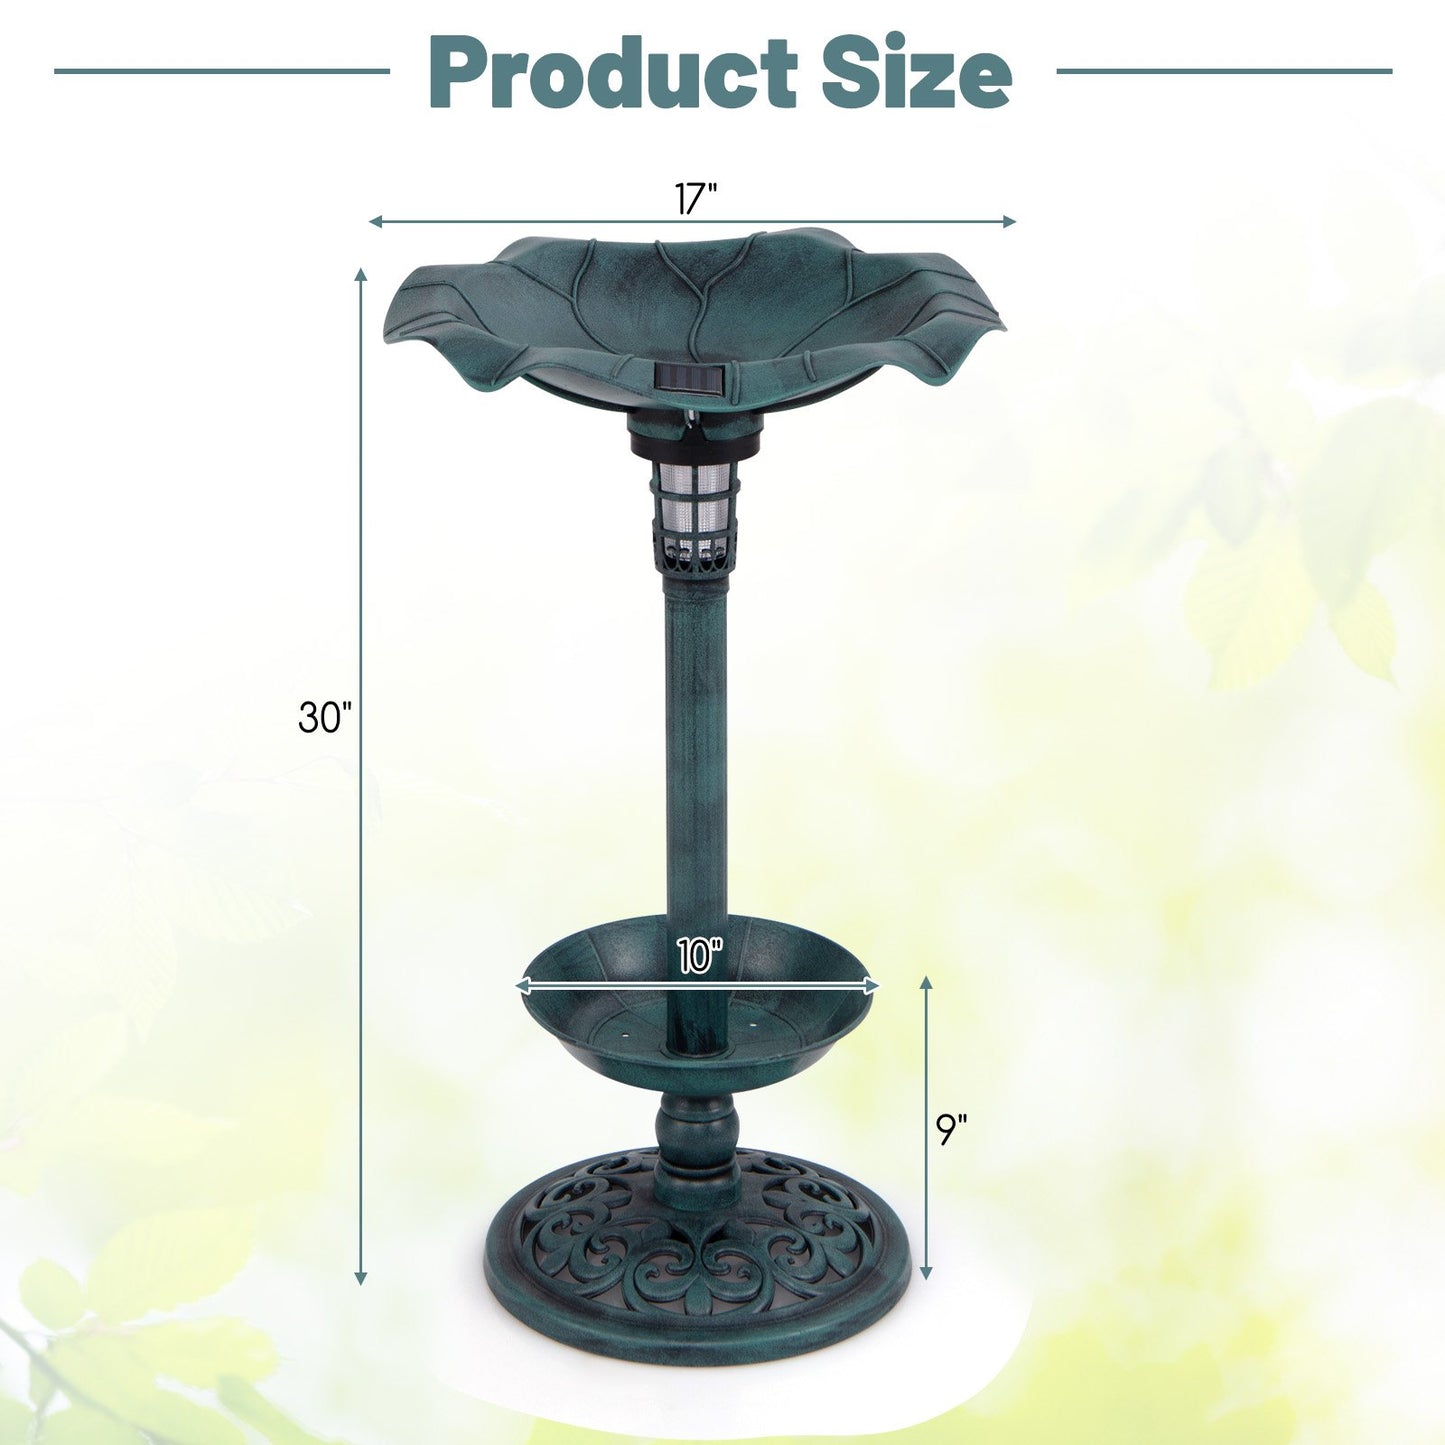 Standing Pedestal Birdbath and Feeder Combo with Lotus Leaf Bowl, Green